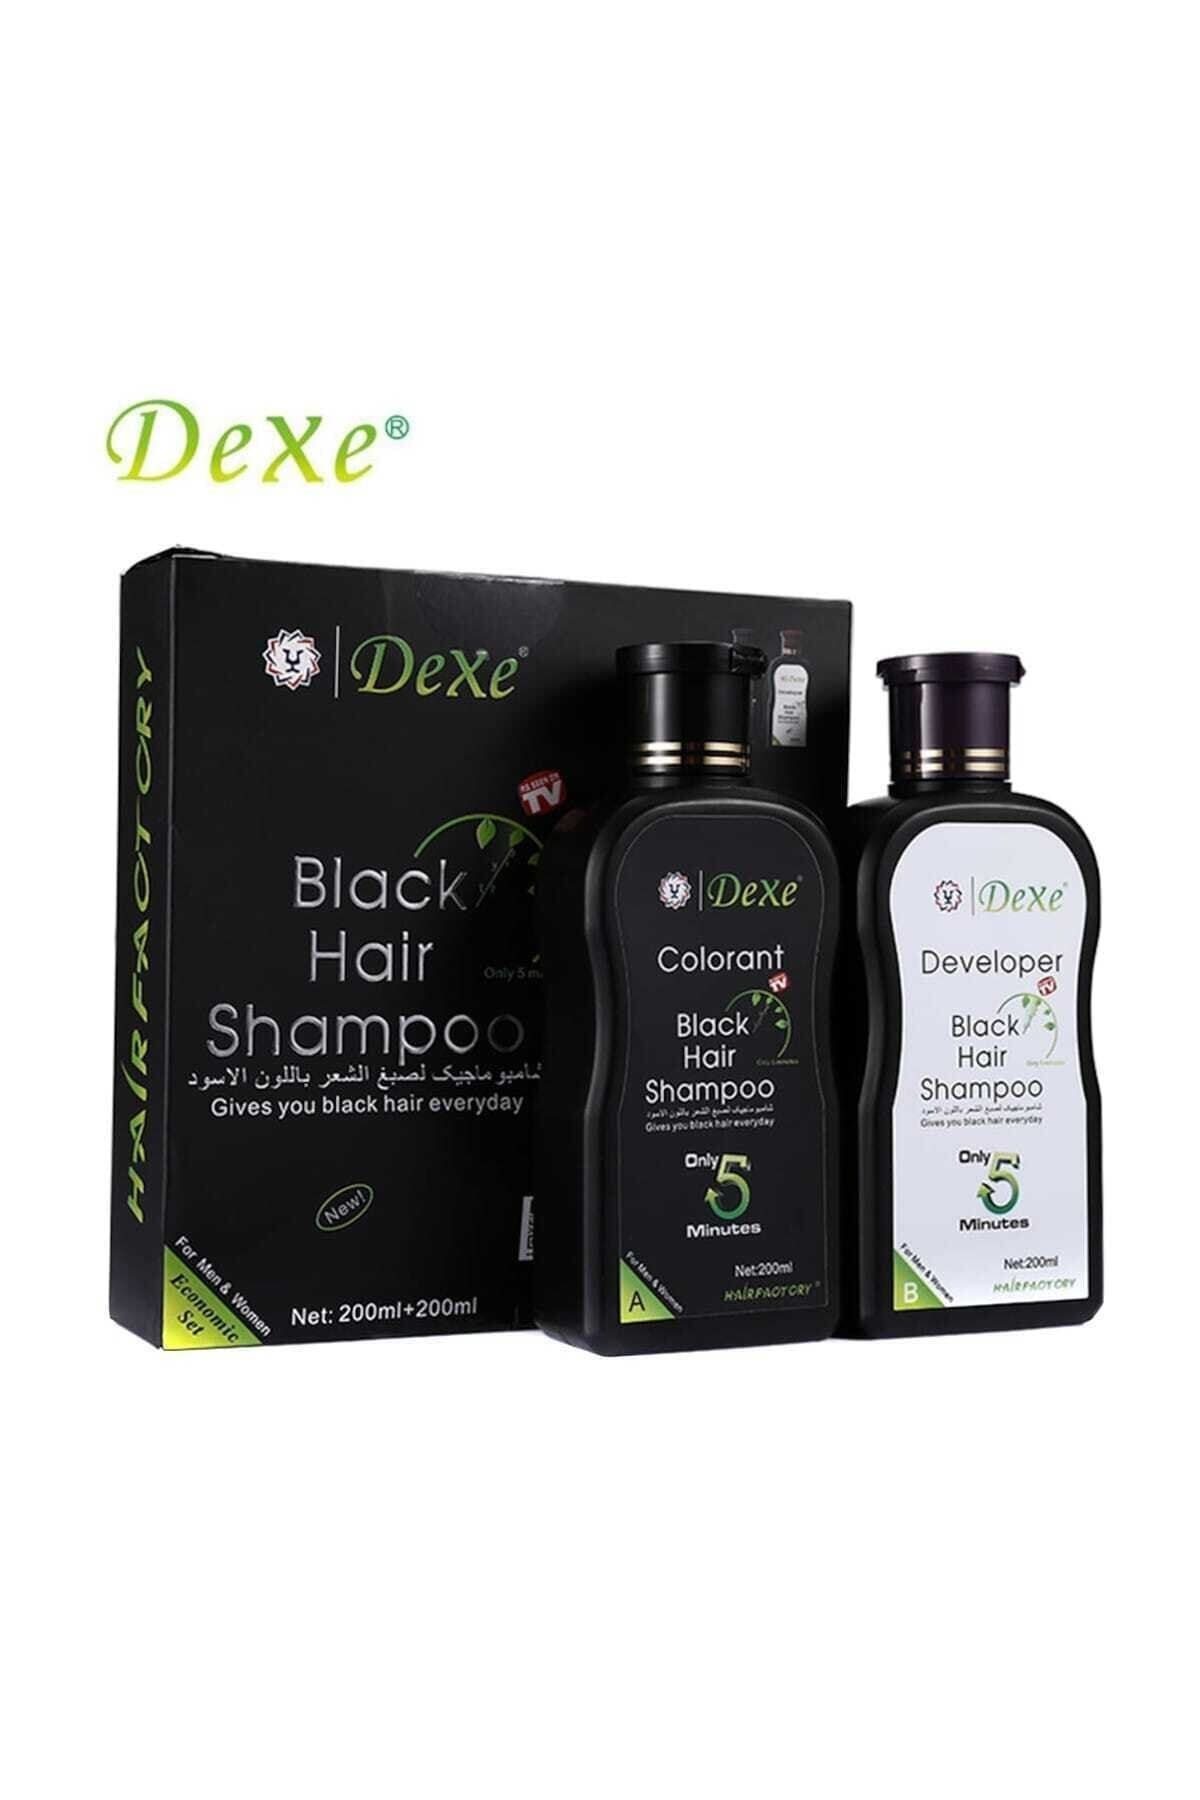 Dexe Beyaz Kapatici Siyah Sampuan Black Hair Shampoo 200ml 200ml Fiyati Yorumlari Trendyol